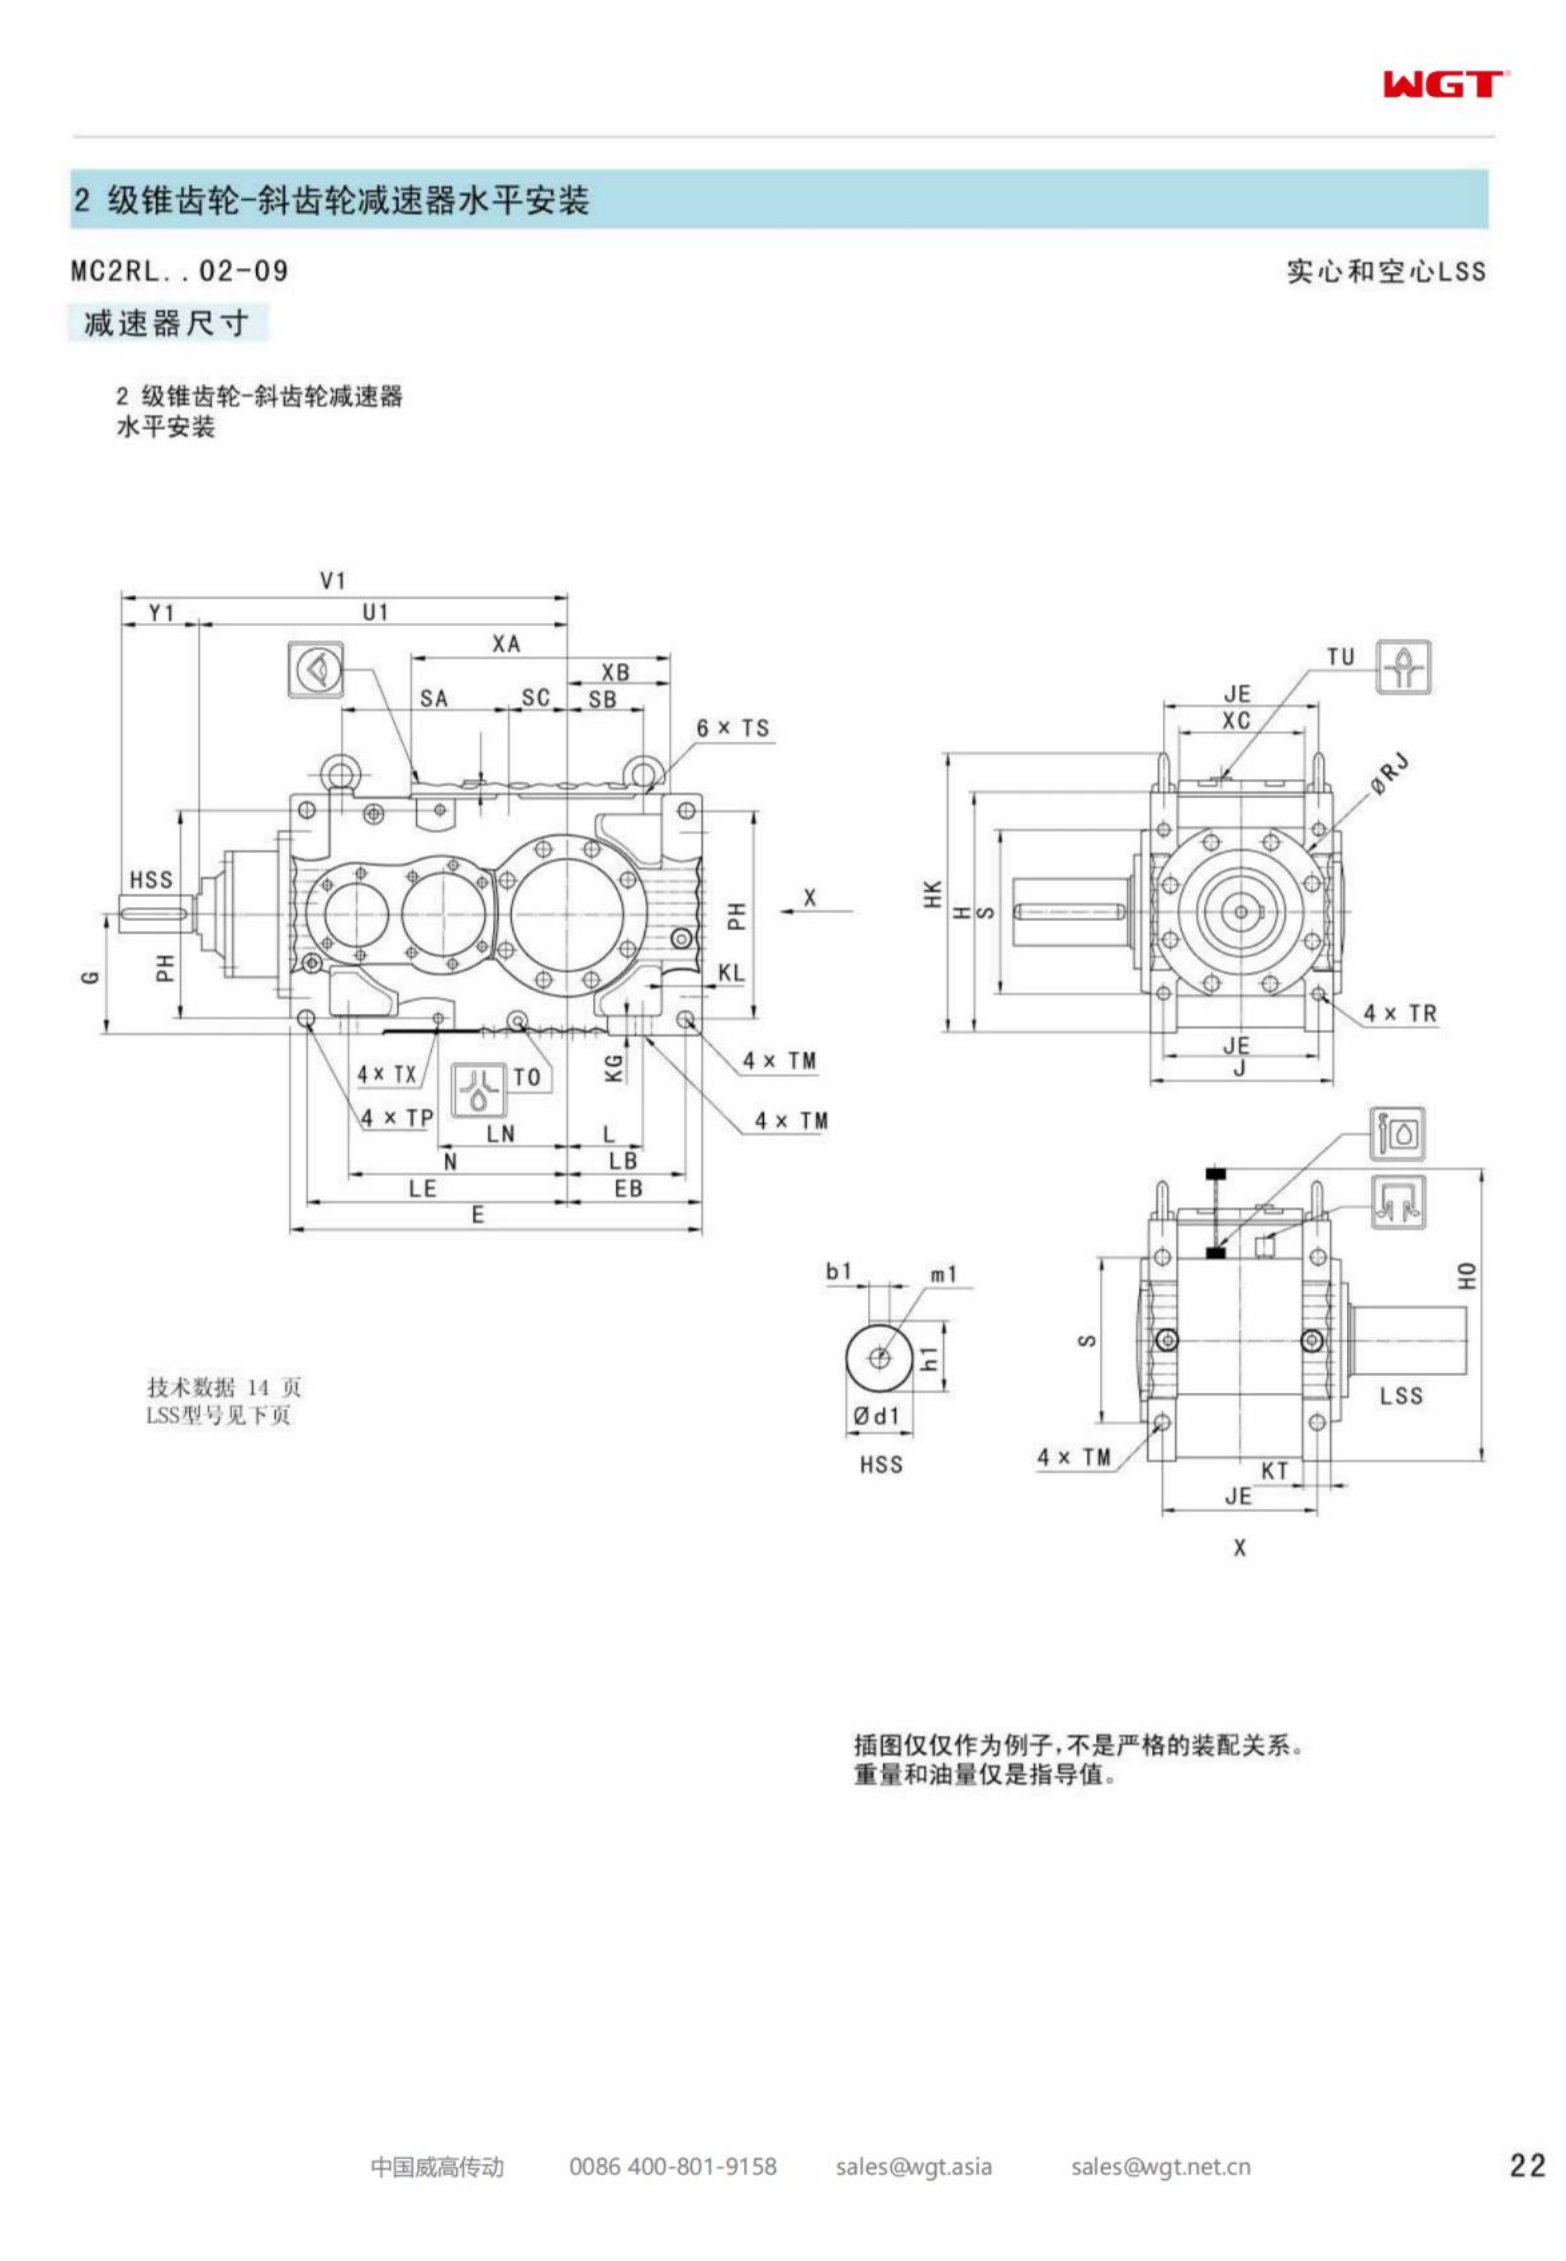 MC2RLSF04 replaces _SEW_MC_Series gearbox (patent)